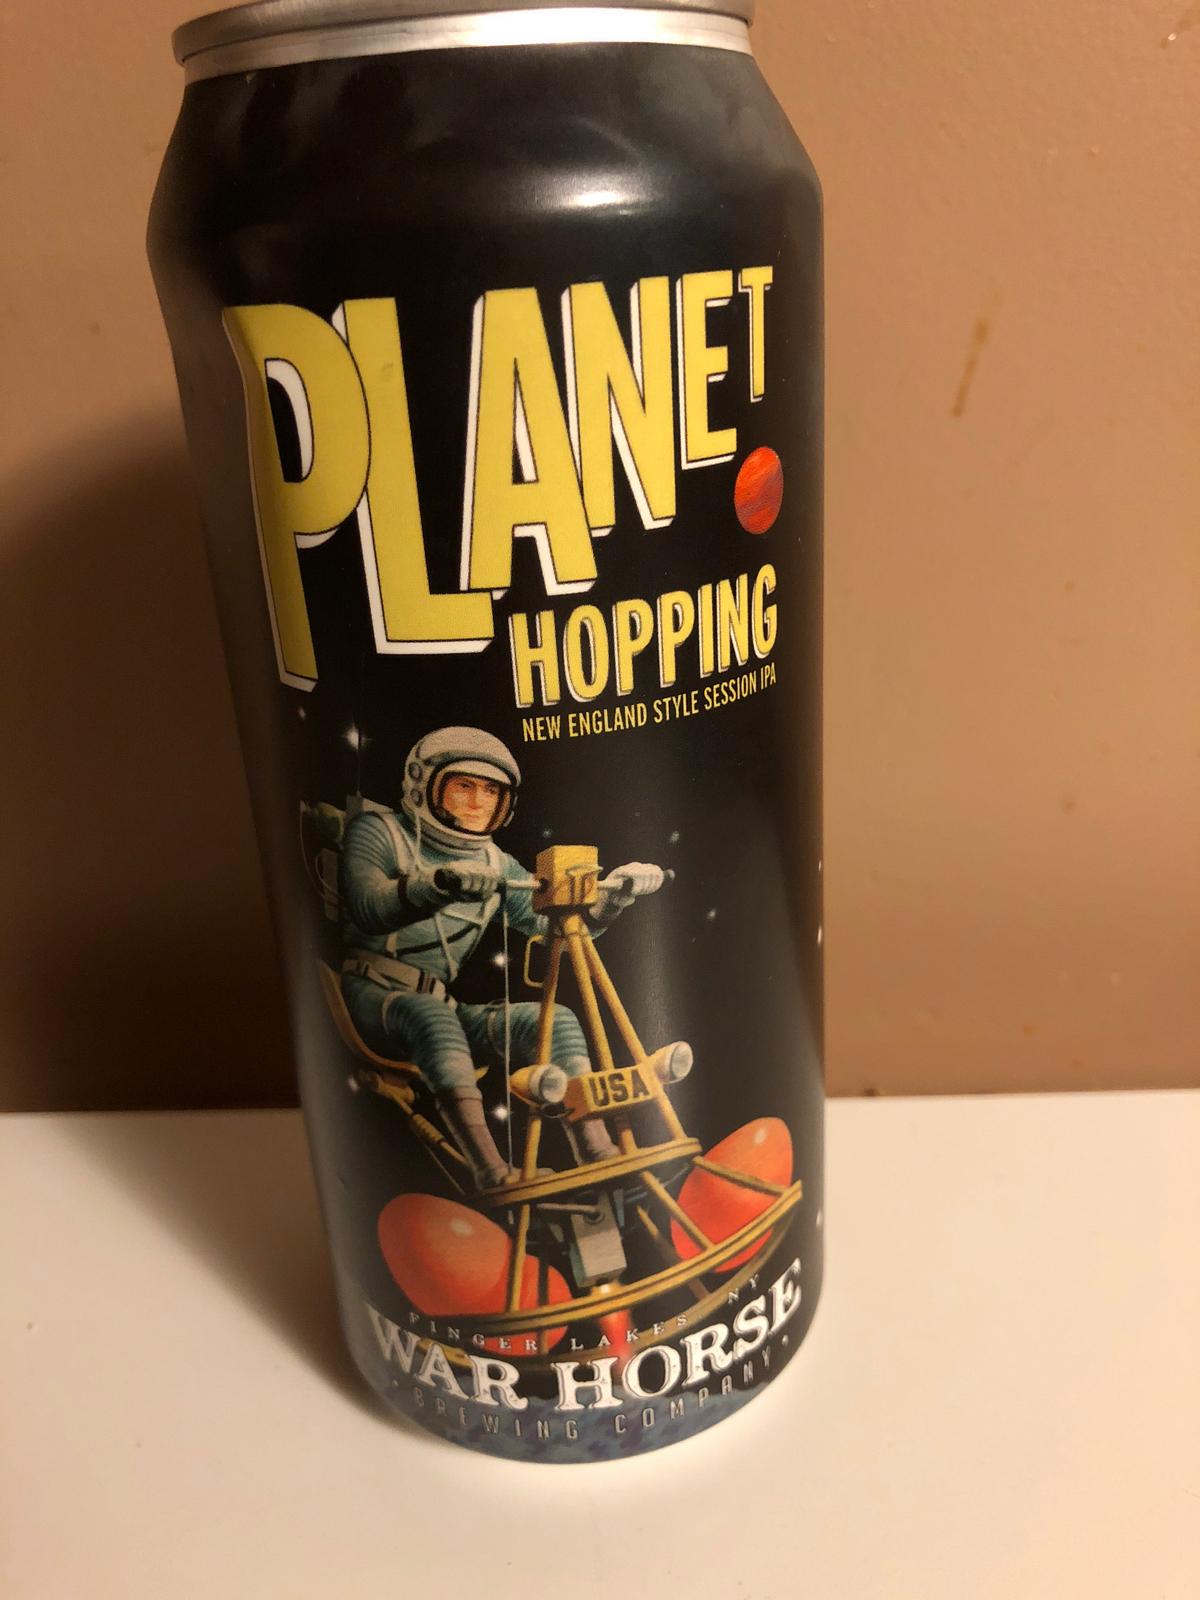 Planet Hopping